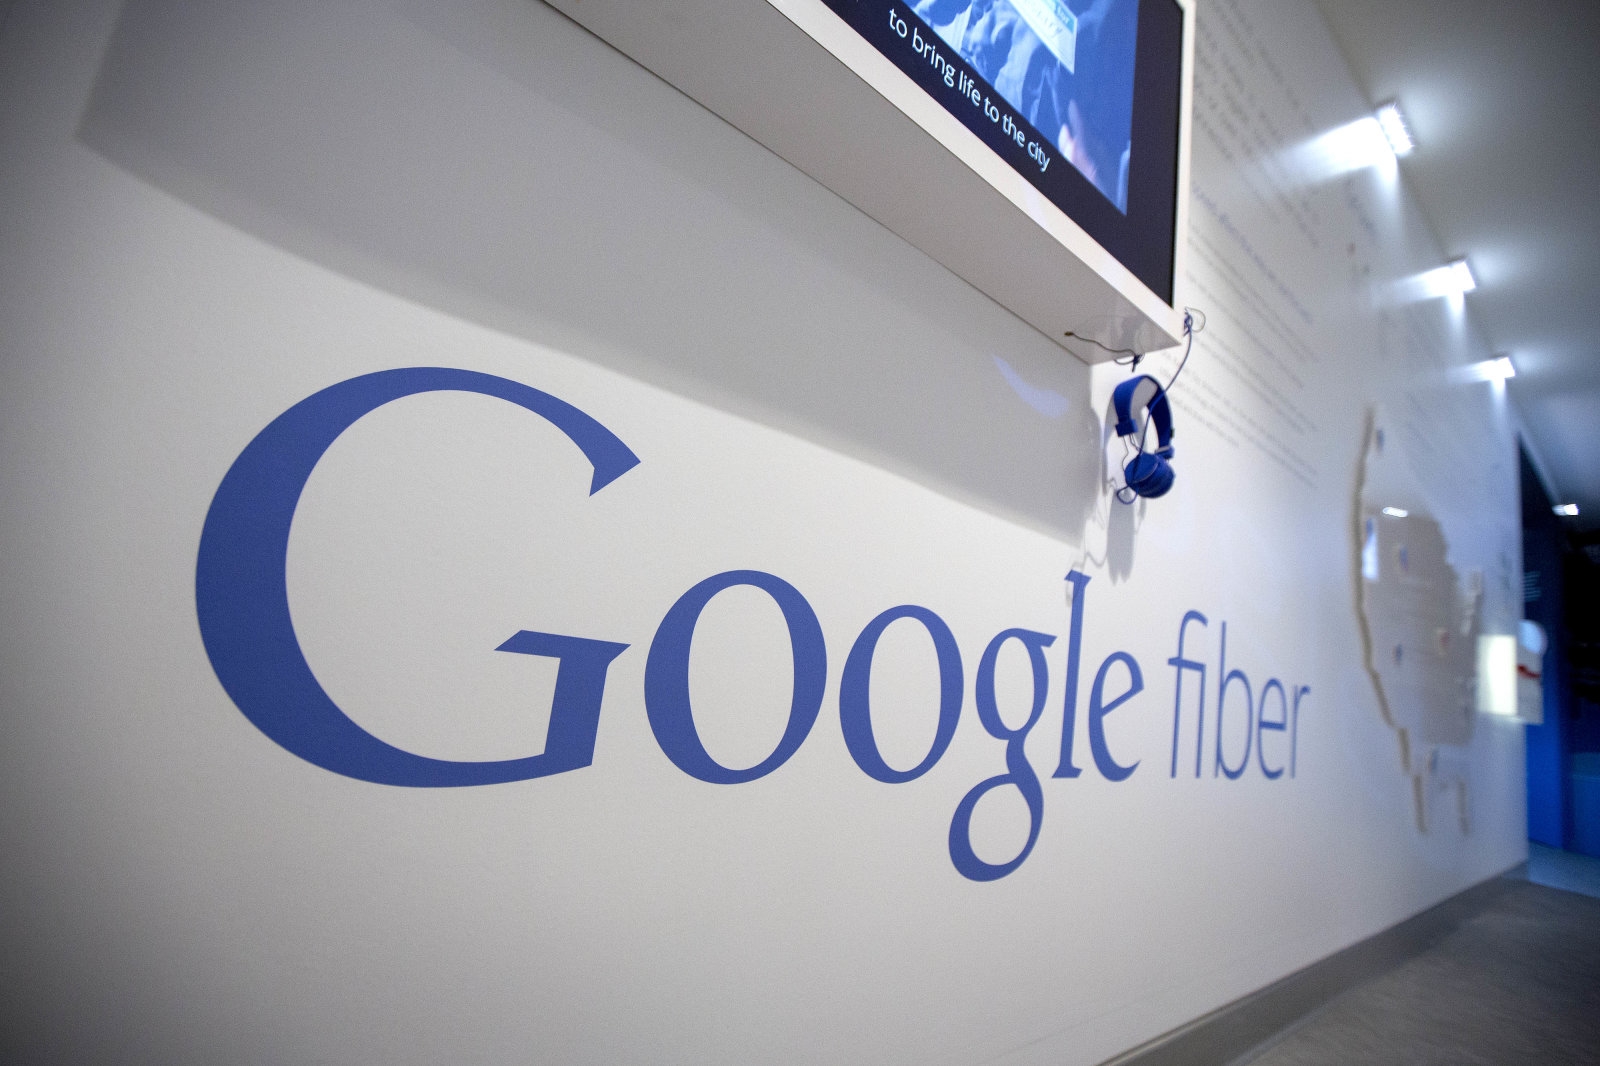 Google Fiber won’t offer TV in San Antonio and Louisville | DeviceDaily.com